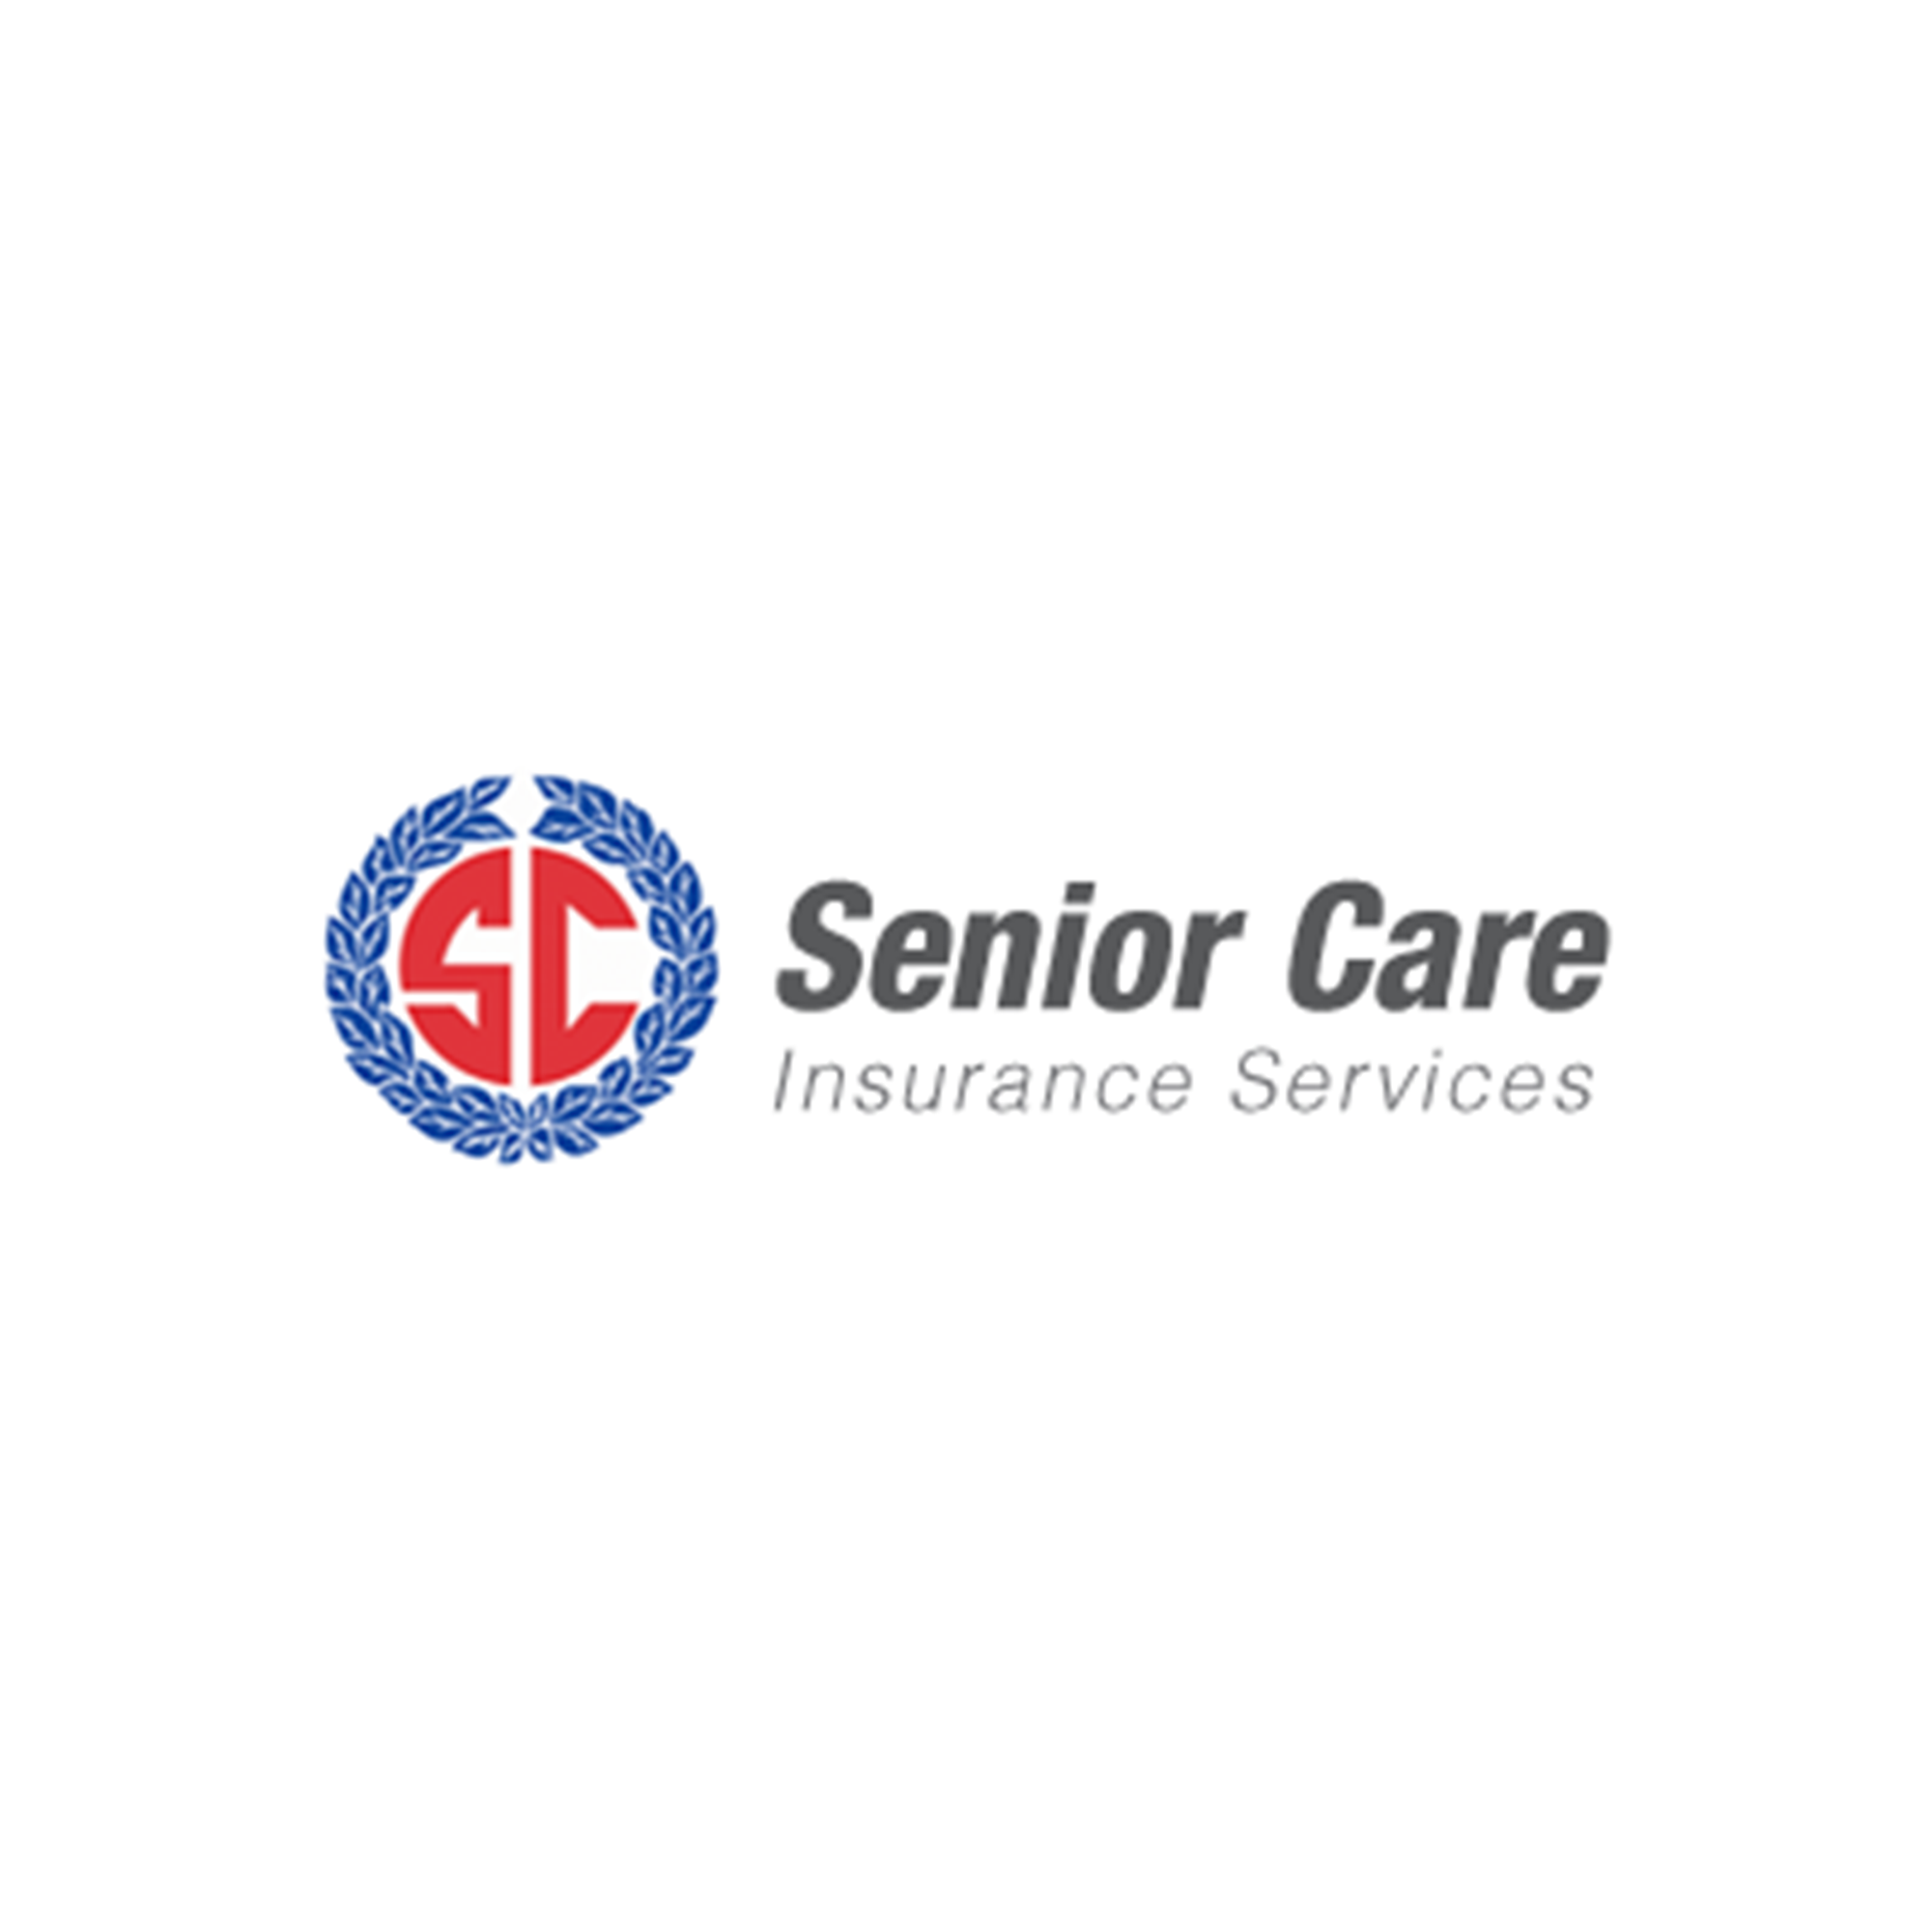 Senior Care Insurance Services - Home - Facebook